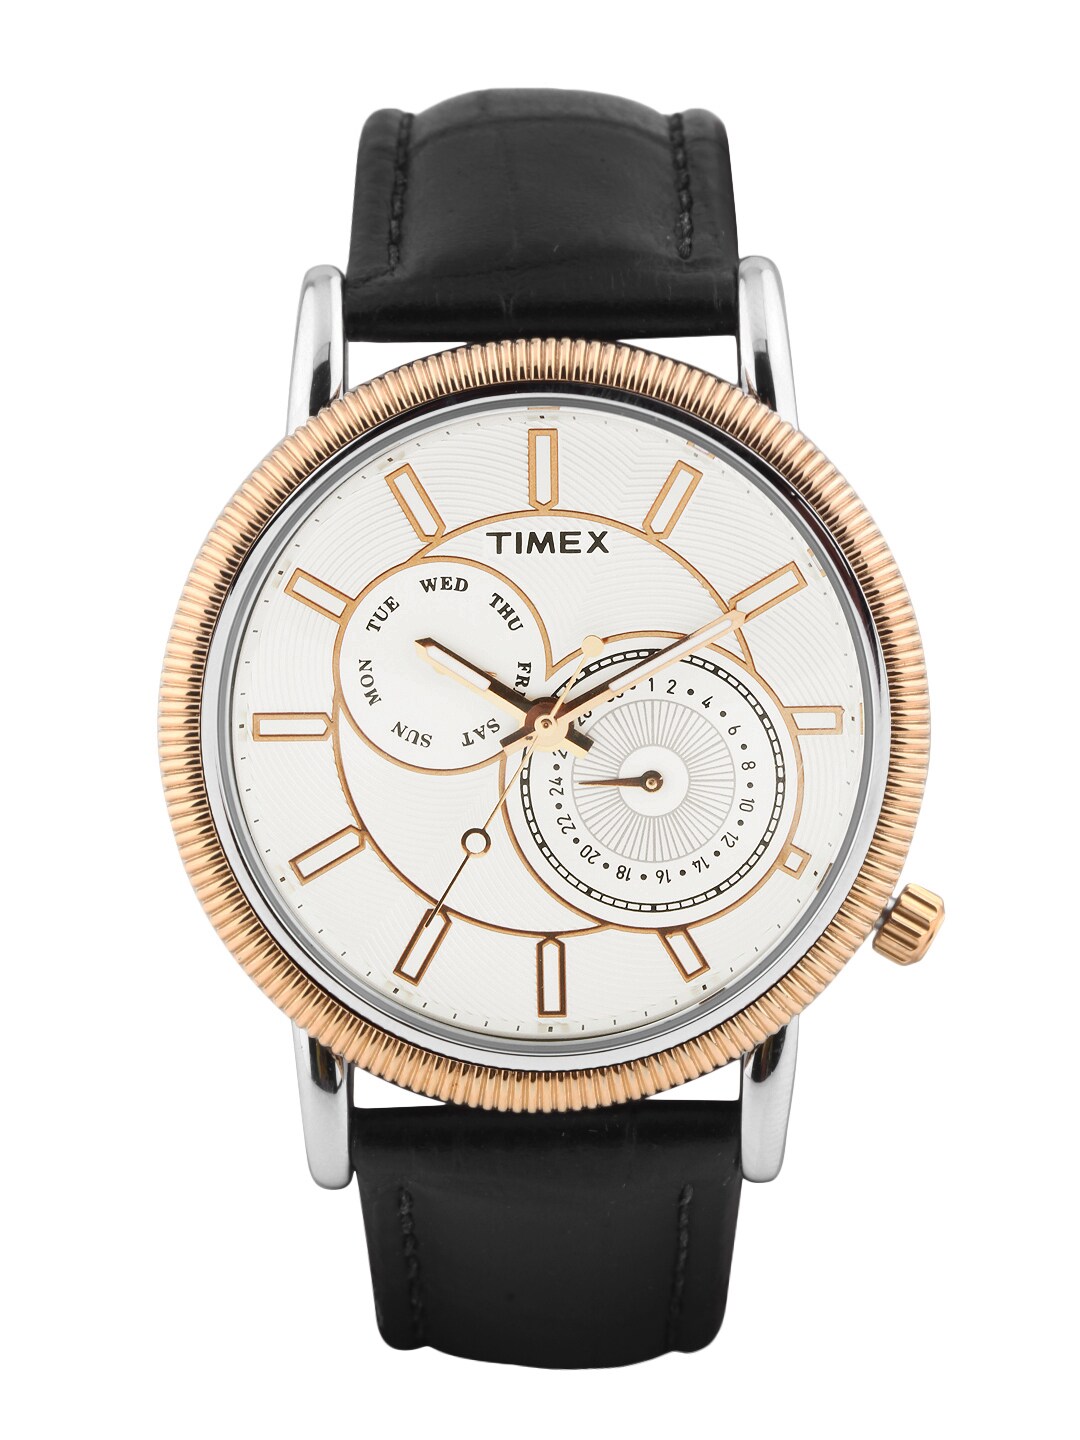 Timex Men Off-White Dial Watch